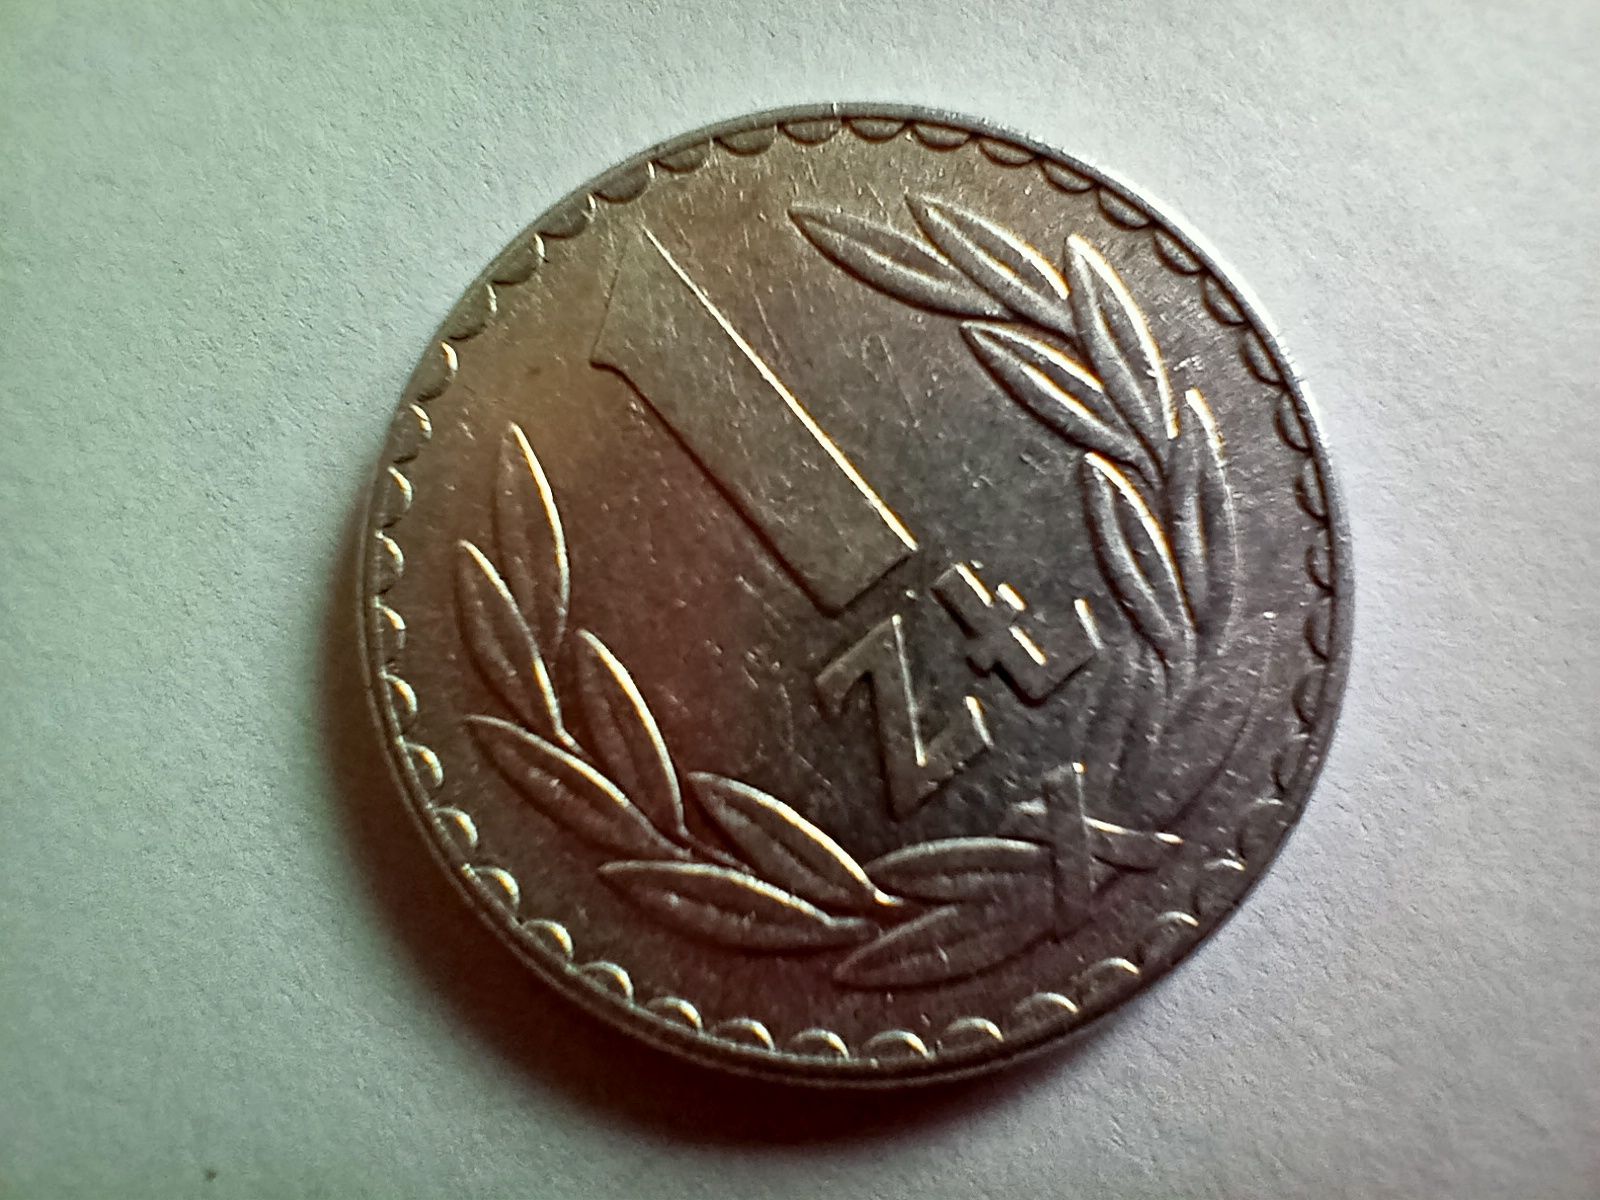 Moneta 1 zł 1976 rok